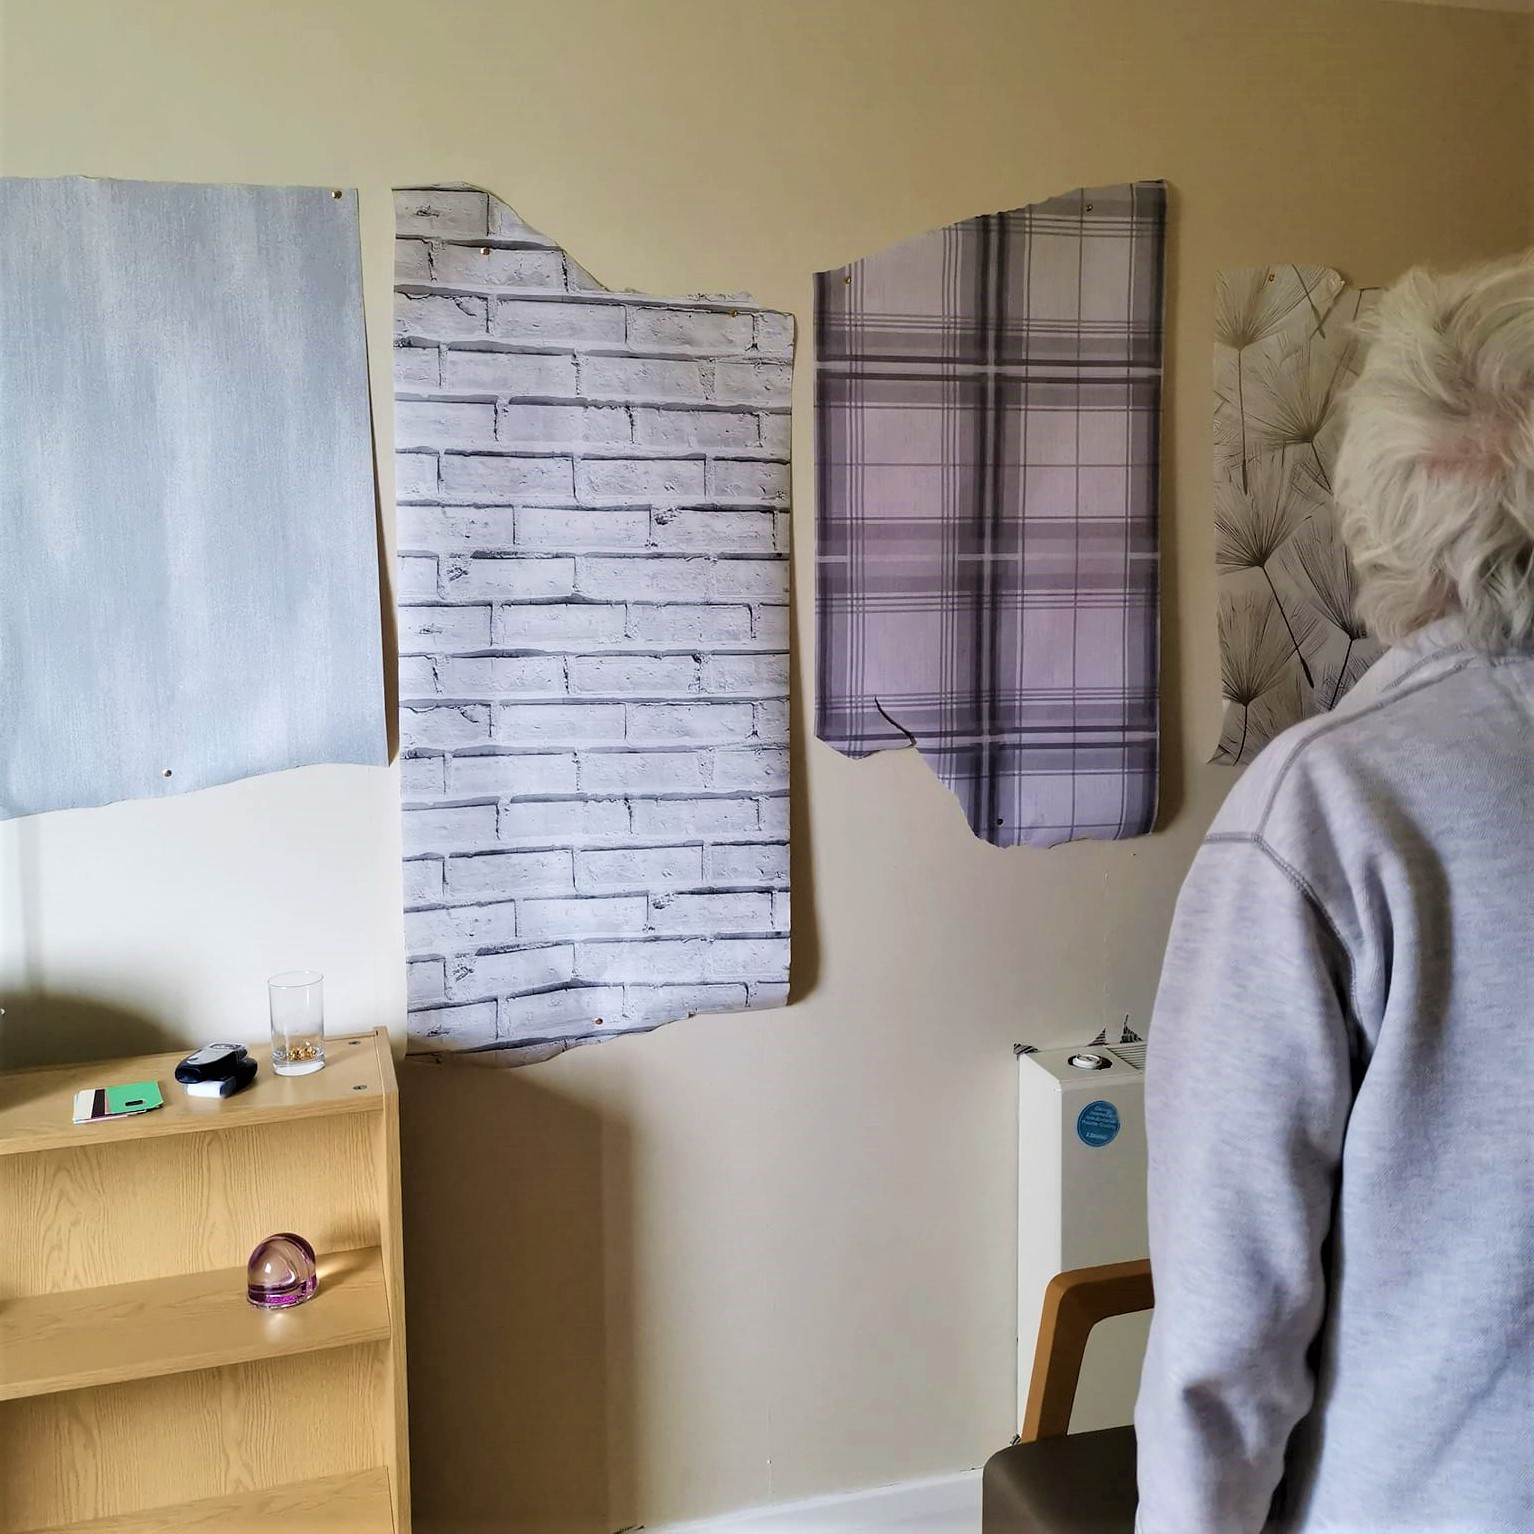 Clement Park - resident choosing wallpaper